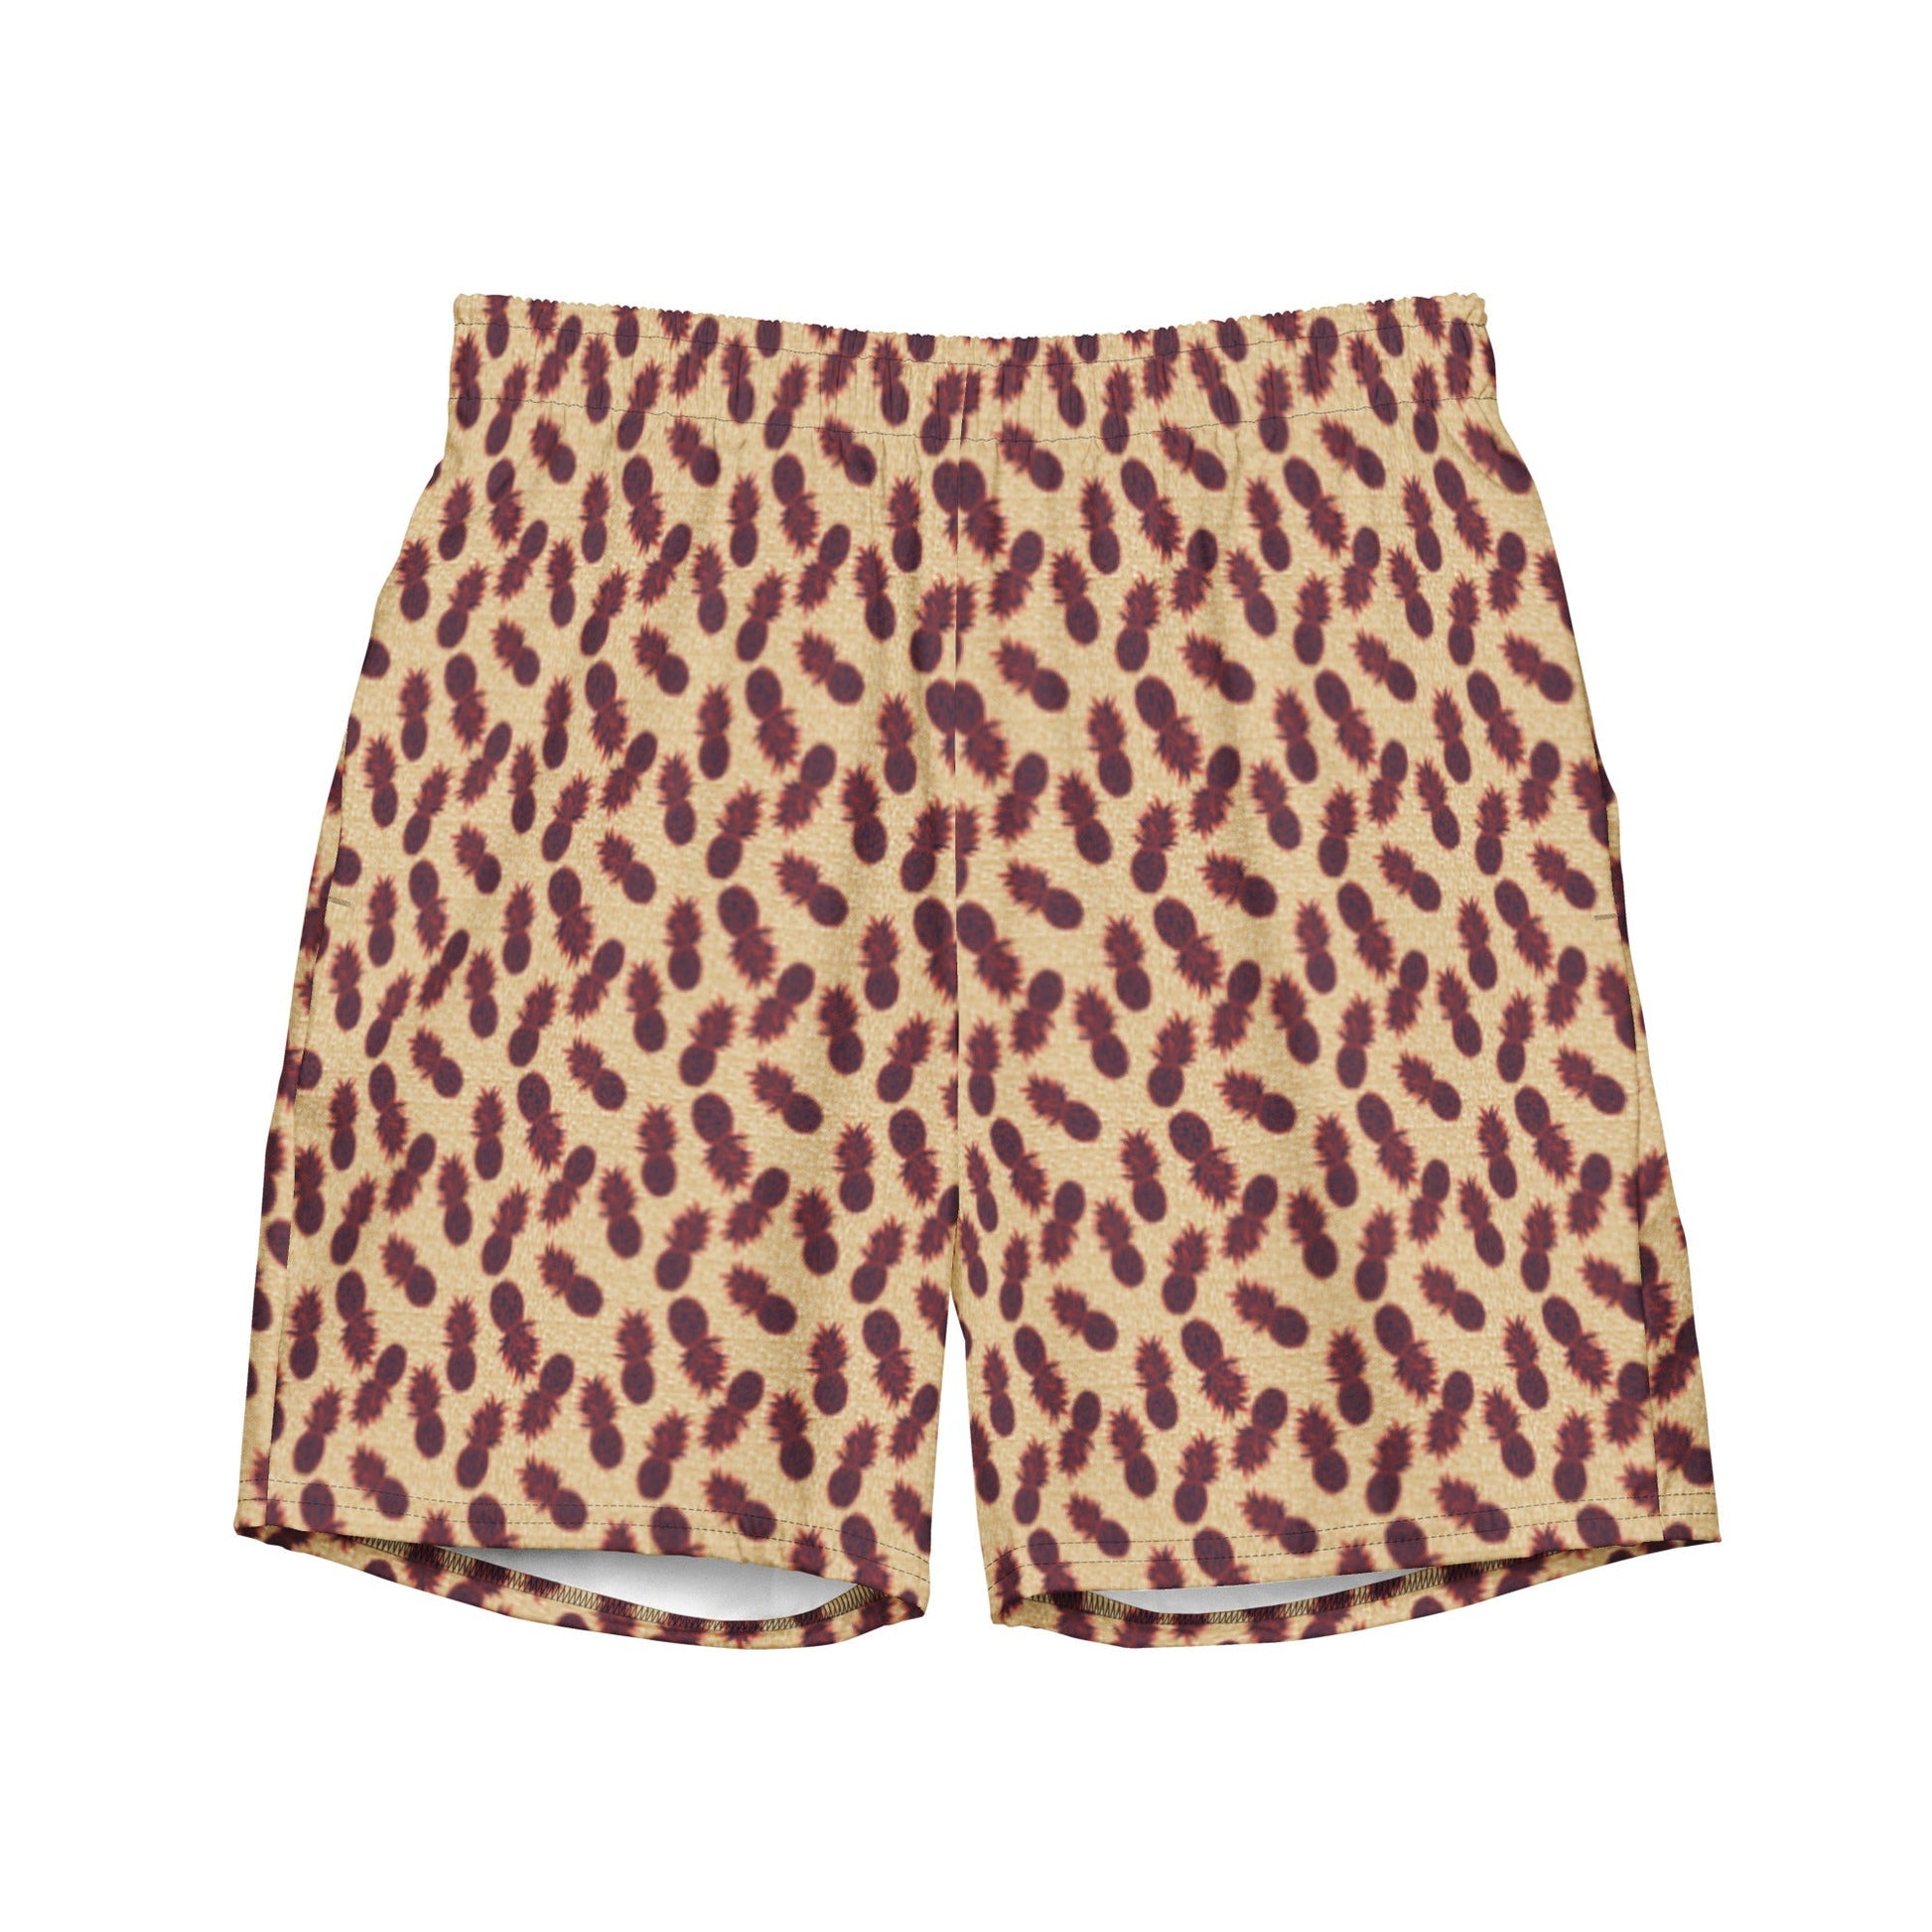 Men's Pineapple Beach Board Shorts - Tropical Seas Clothing 